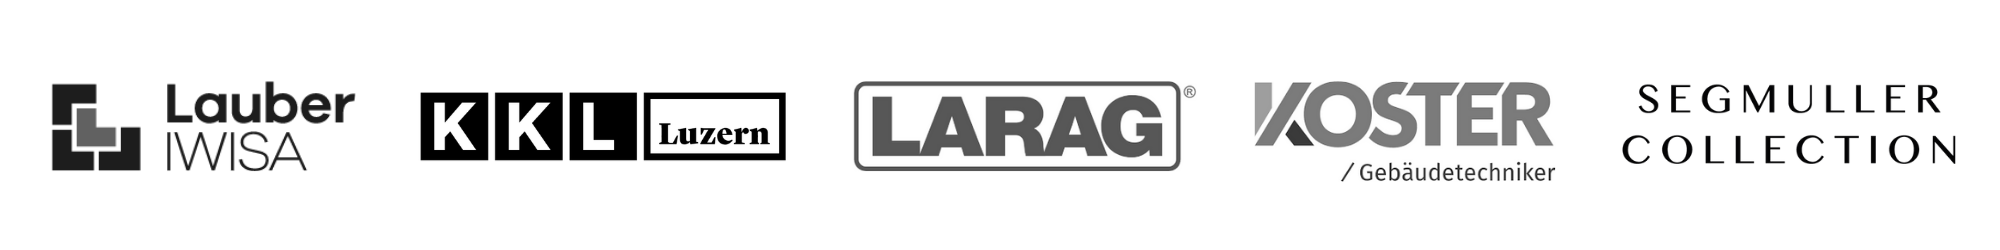 Logo KKL, Logo LARAG, Logo Koster